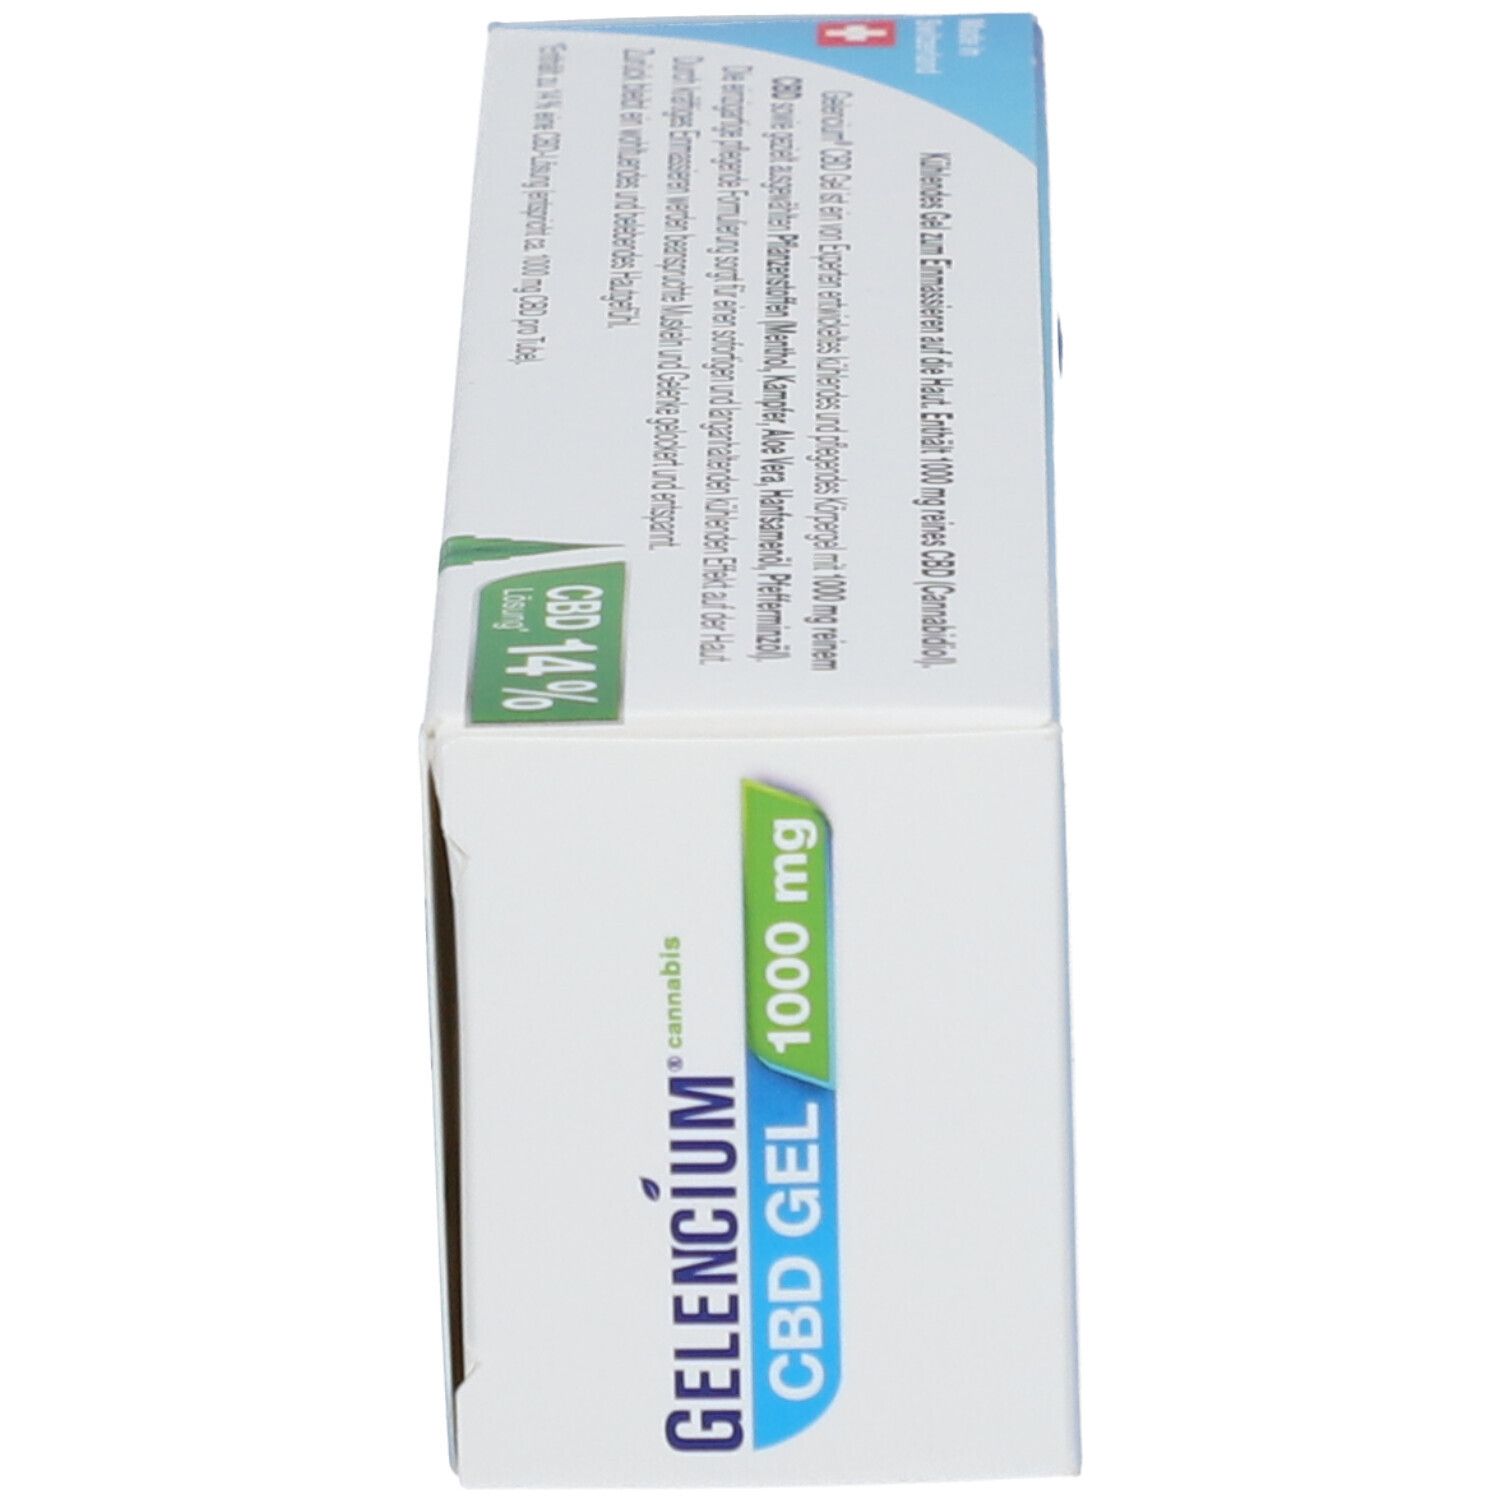 GELENCIUM® Cannabis CBD Gel 1000 mg kühlend 100 ml - SHOP APOTHEKE